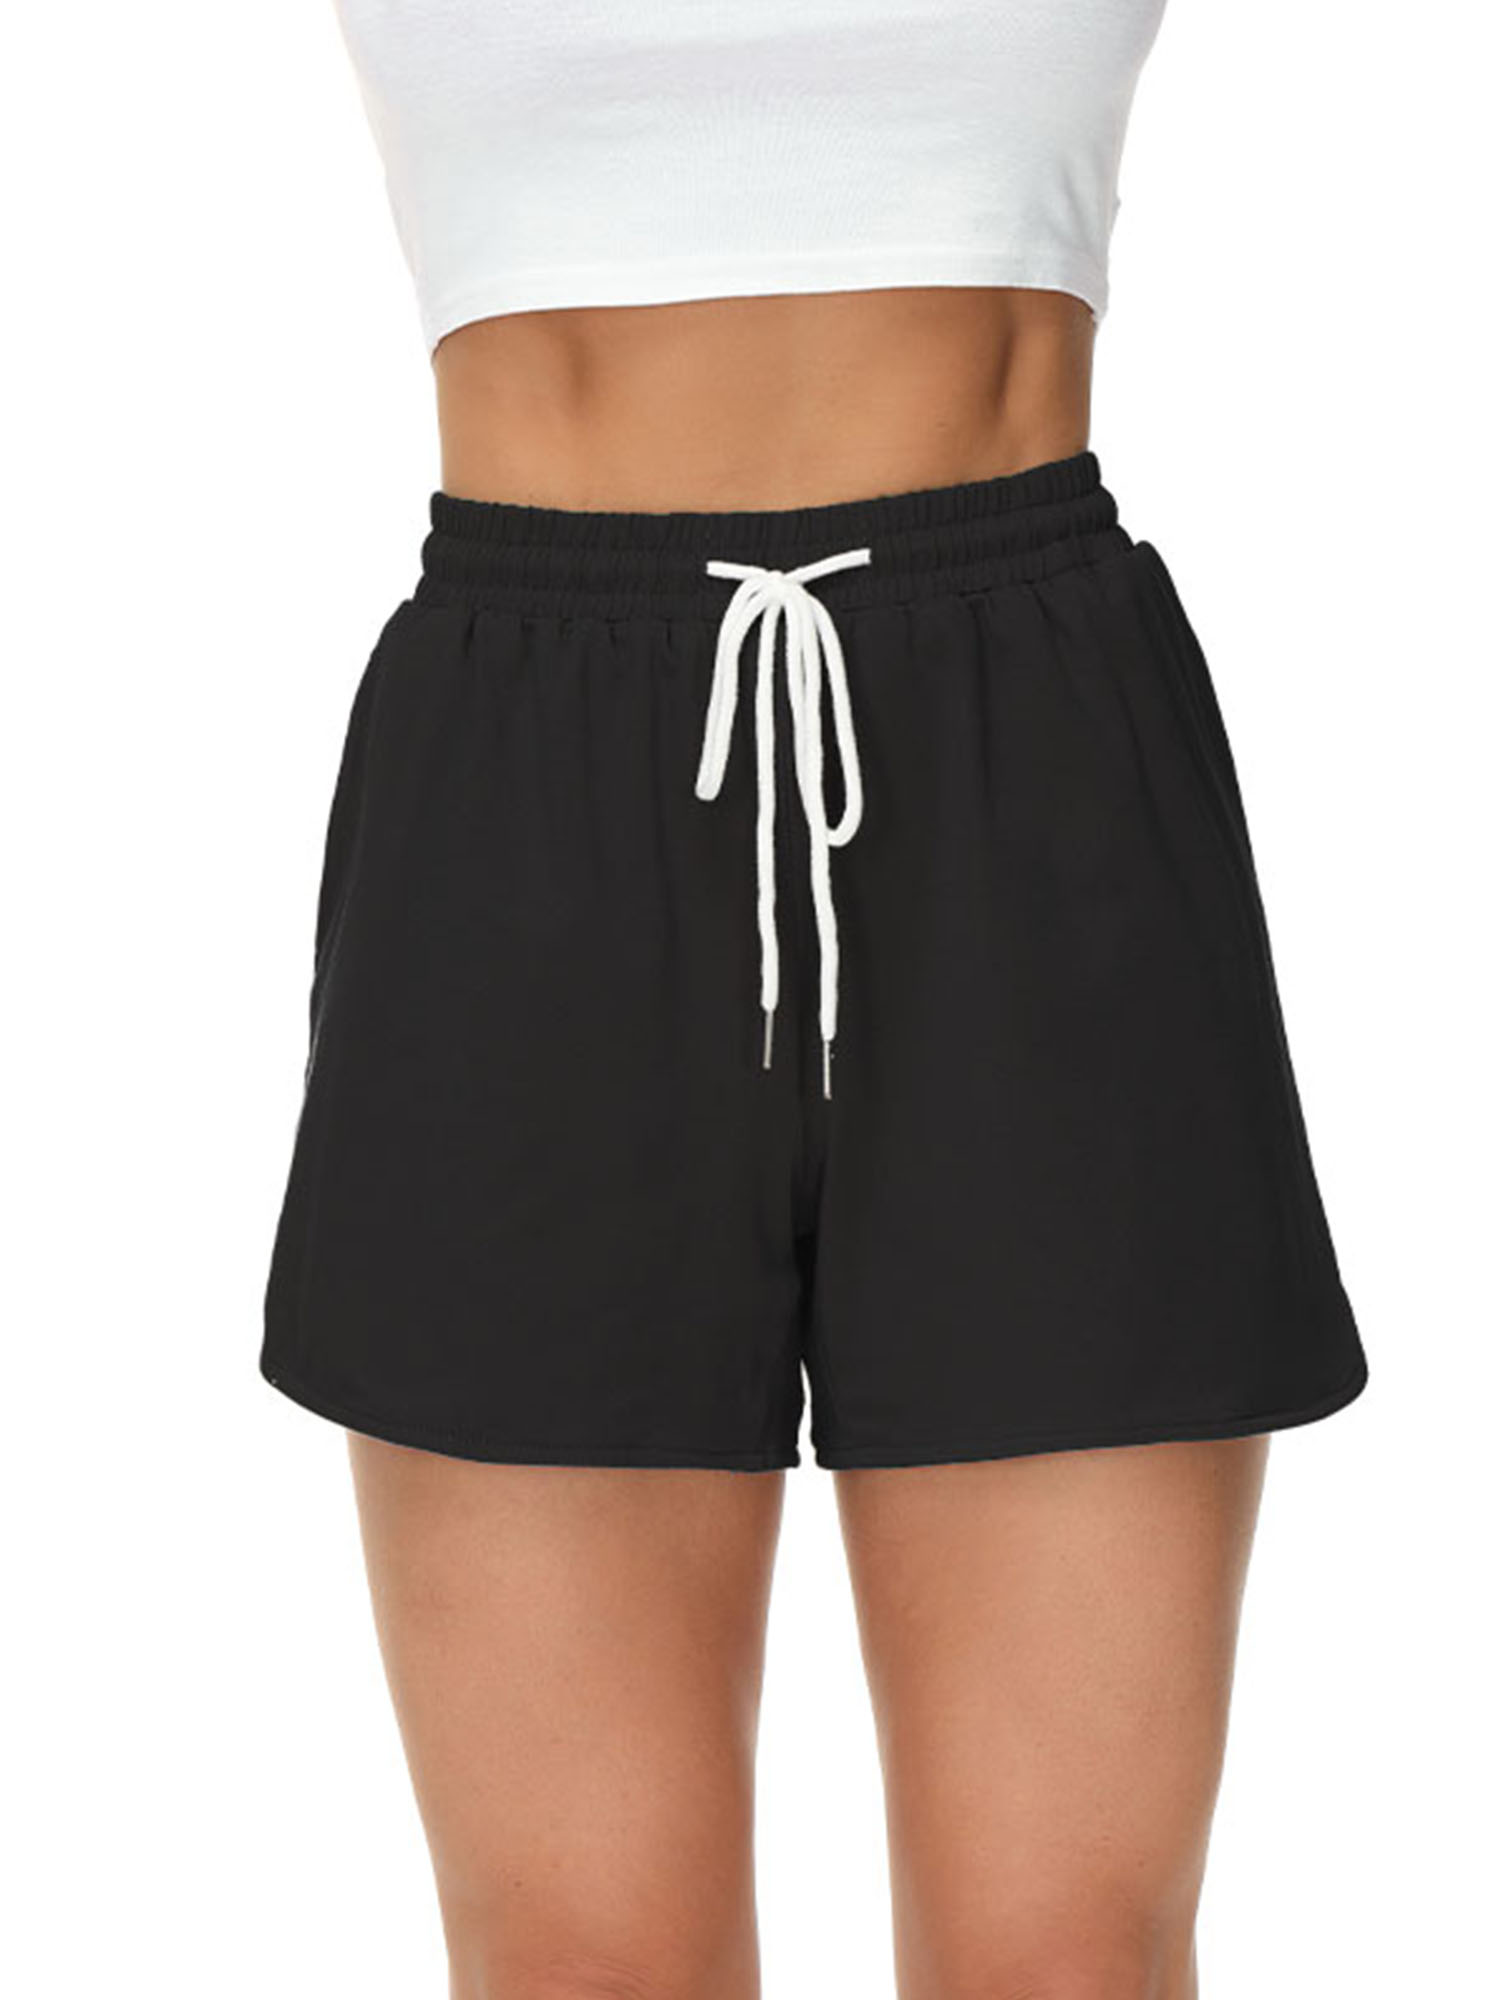 Black Womens Maternity Shorts Solid Summer Lined High Waist Beach S M L XL 